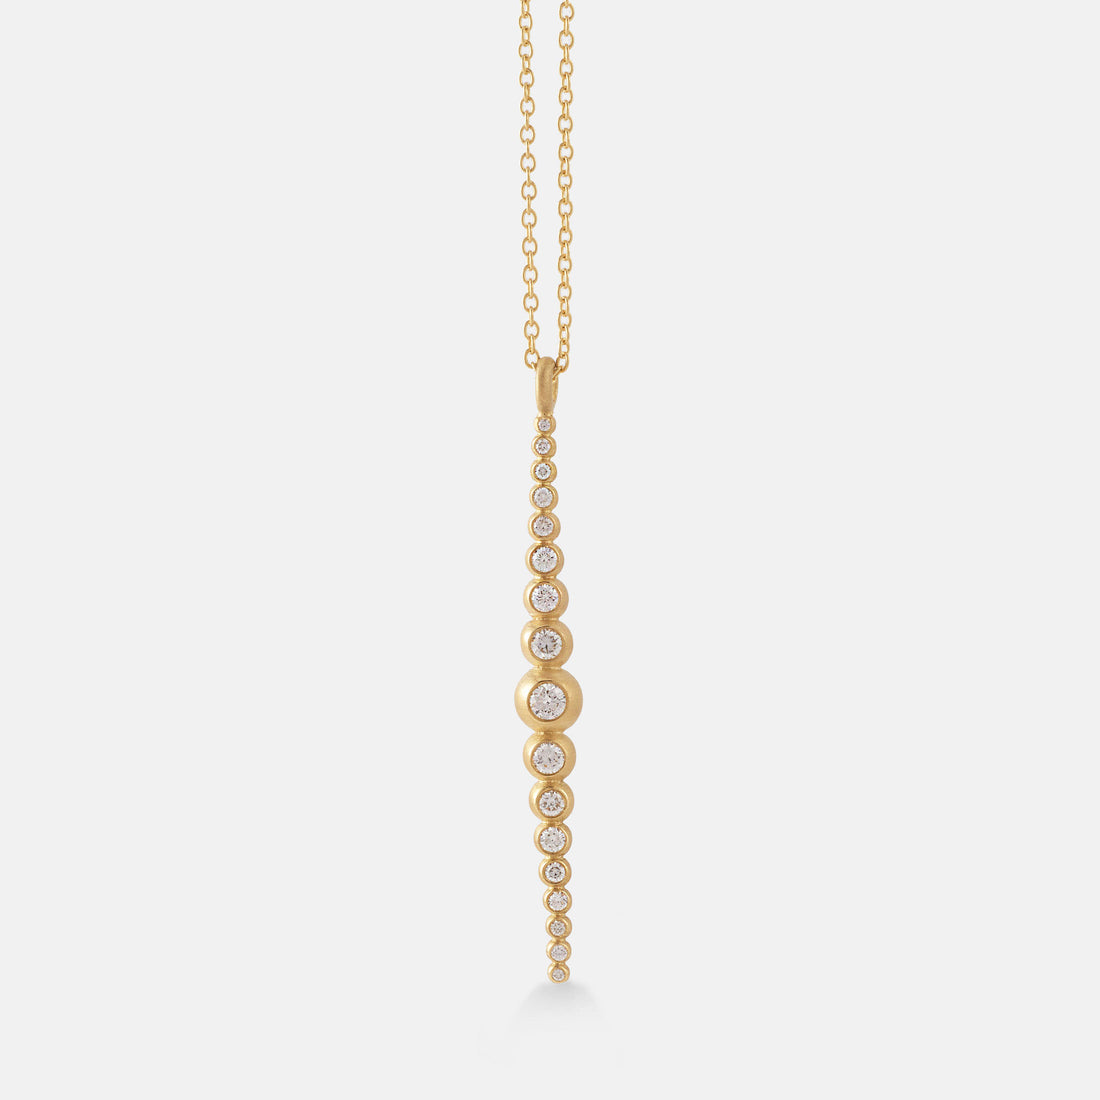 Stick necklace with graduated diamond set beads